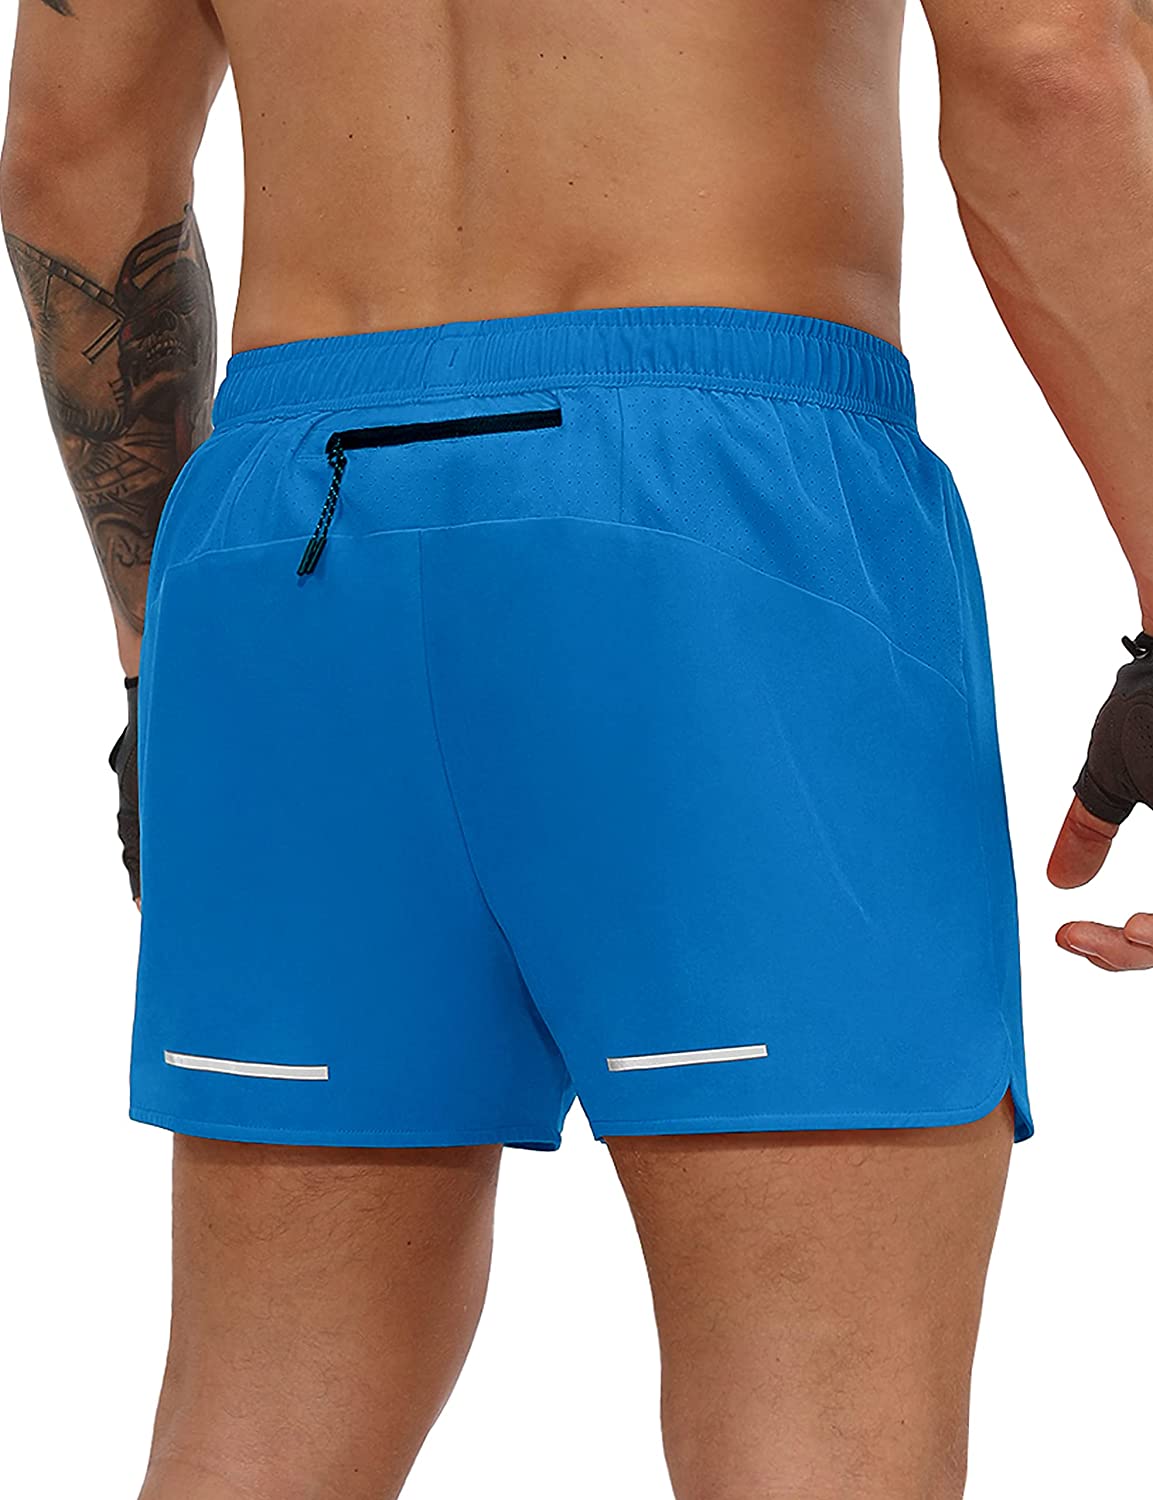 ODODOS Men's 3 Running Shorts with Back Zipper Pocket Quick Dry